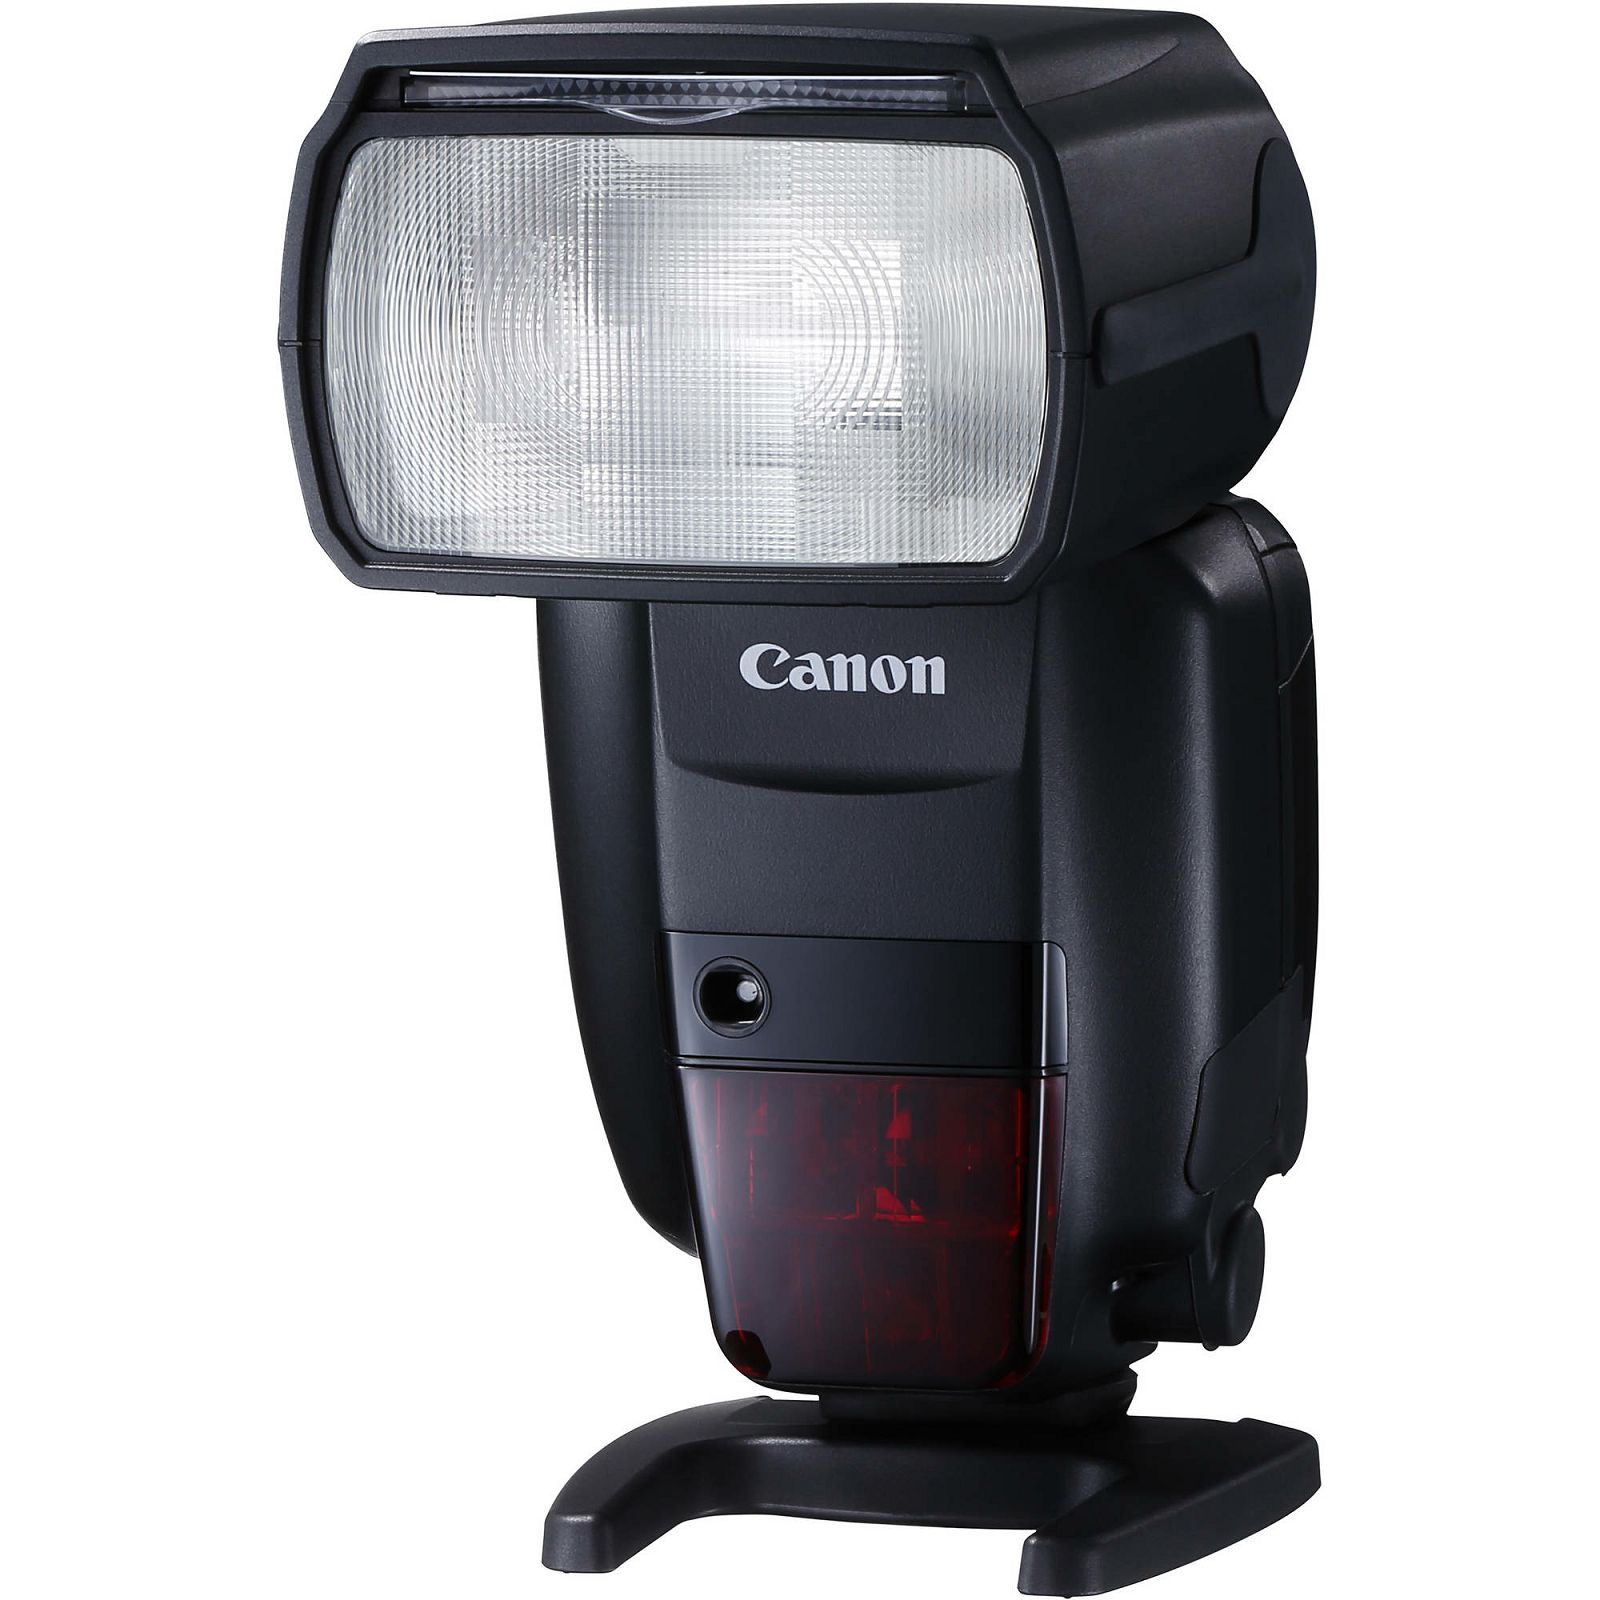 Canon Speedlite 600EX II-RT bljeskalica za fotoaparat 600EX-RT mk2 600EX - RT II blic 600XT-RT flash (1177C003AA)